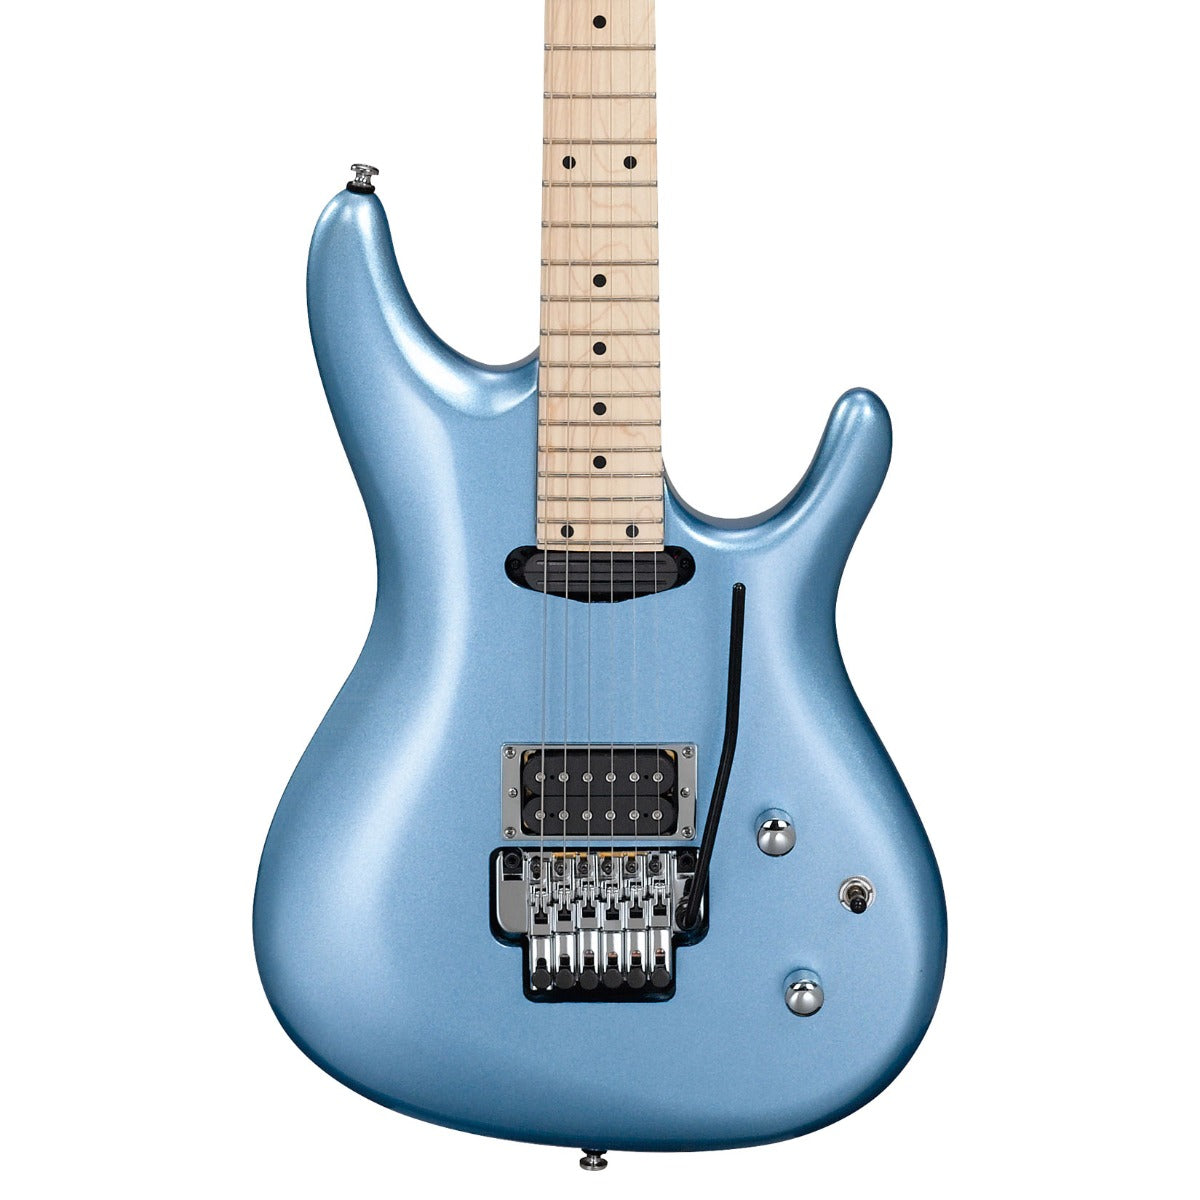 Ibanez JS140MSDL Joe Satriani Signature Electric Guitar in Soda Blue